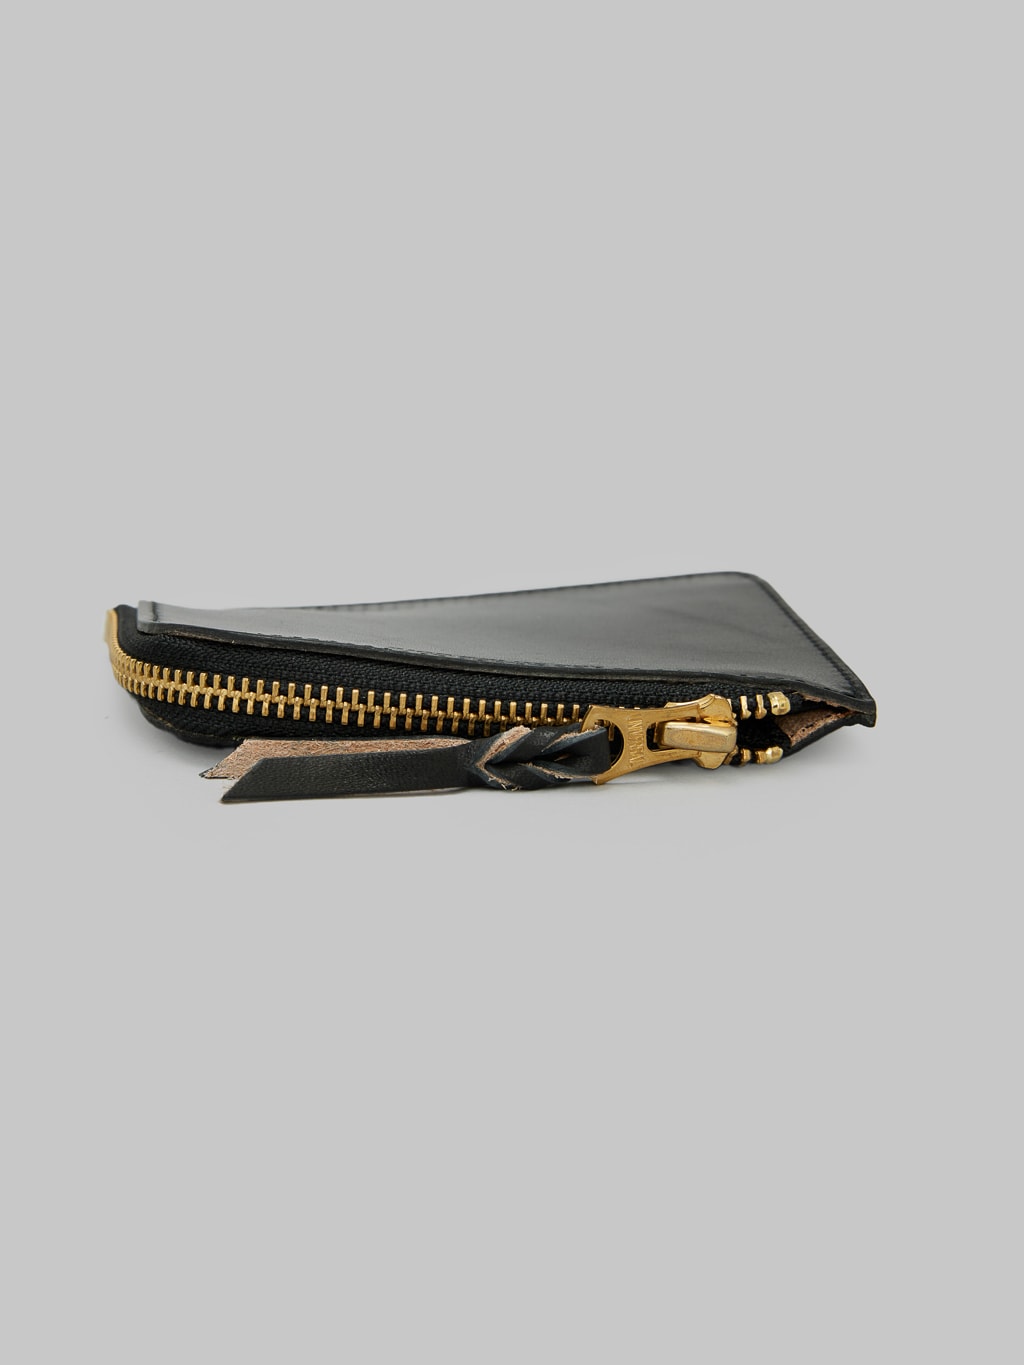 The Strike Gold Leather Zip Wallet Black bill purse